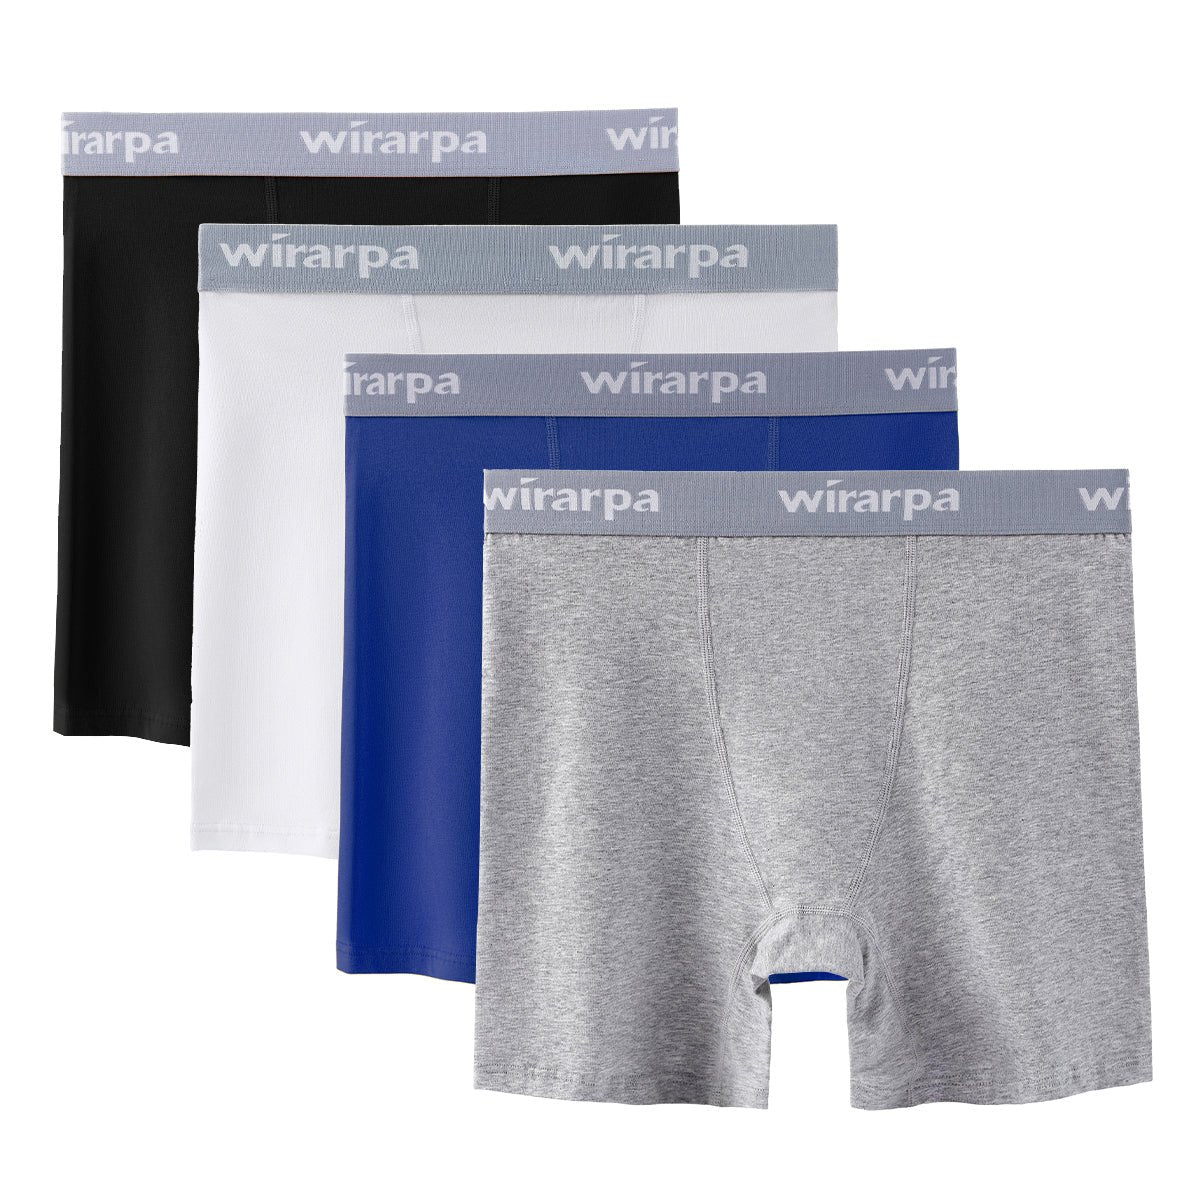 Wirarpa Women's Cotton Anti Chafing Boy Shorts Panties 5.5" Inseam 4 Pack - Wirarpa Apparel, Inc.